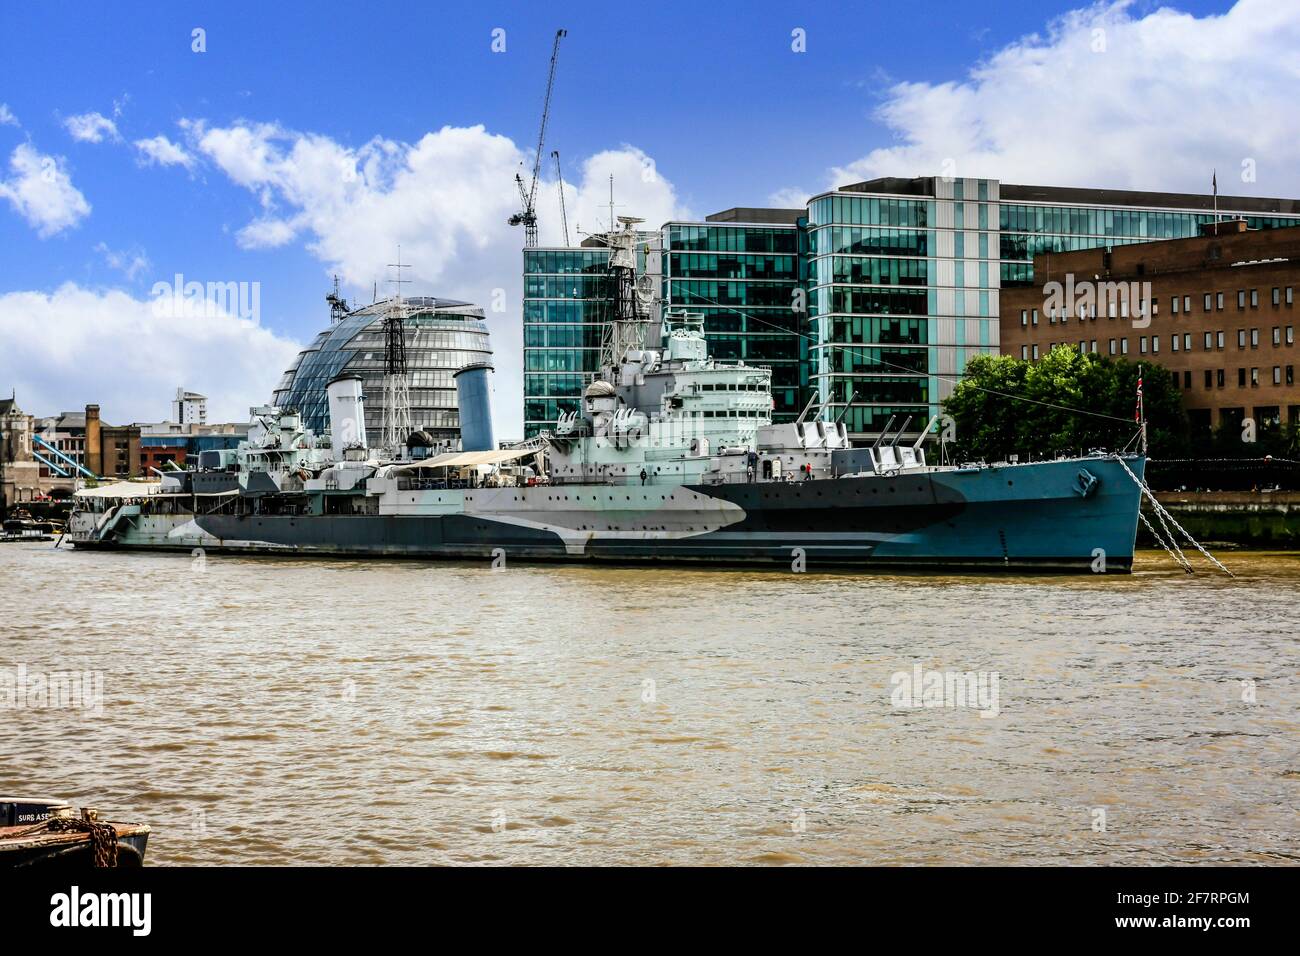 HMS Belfast battleship moared on the Thames in London Stock Photo